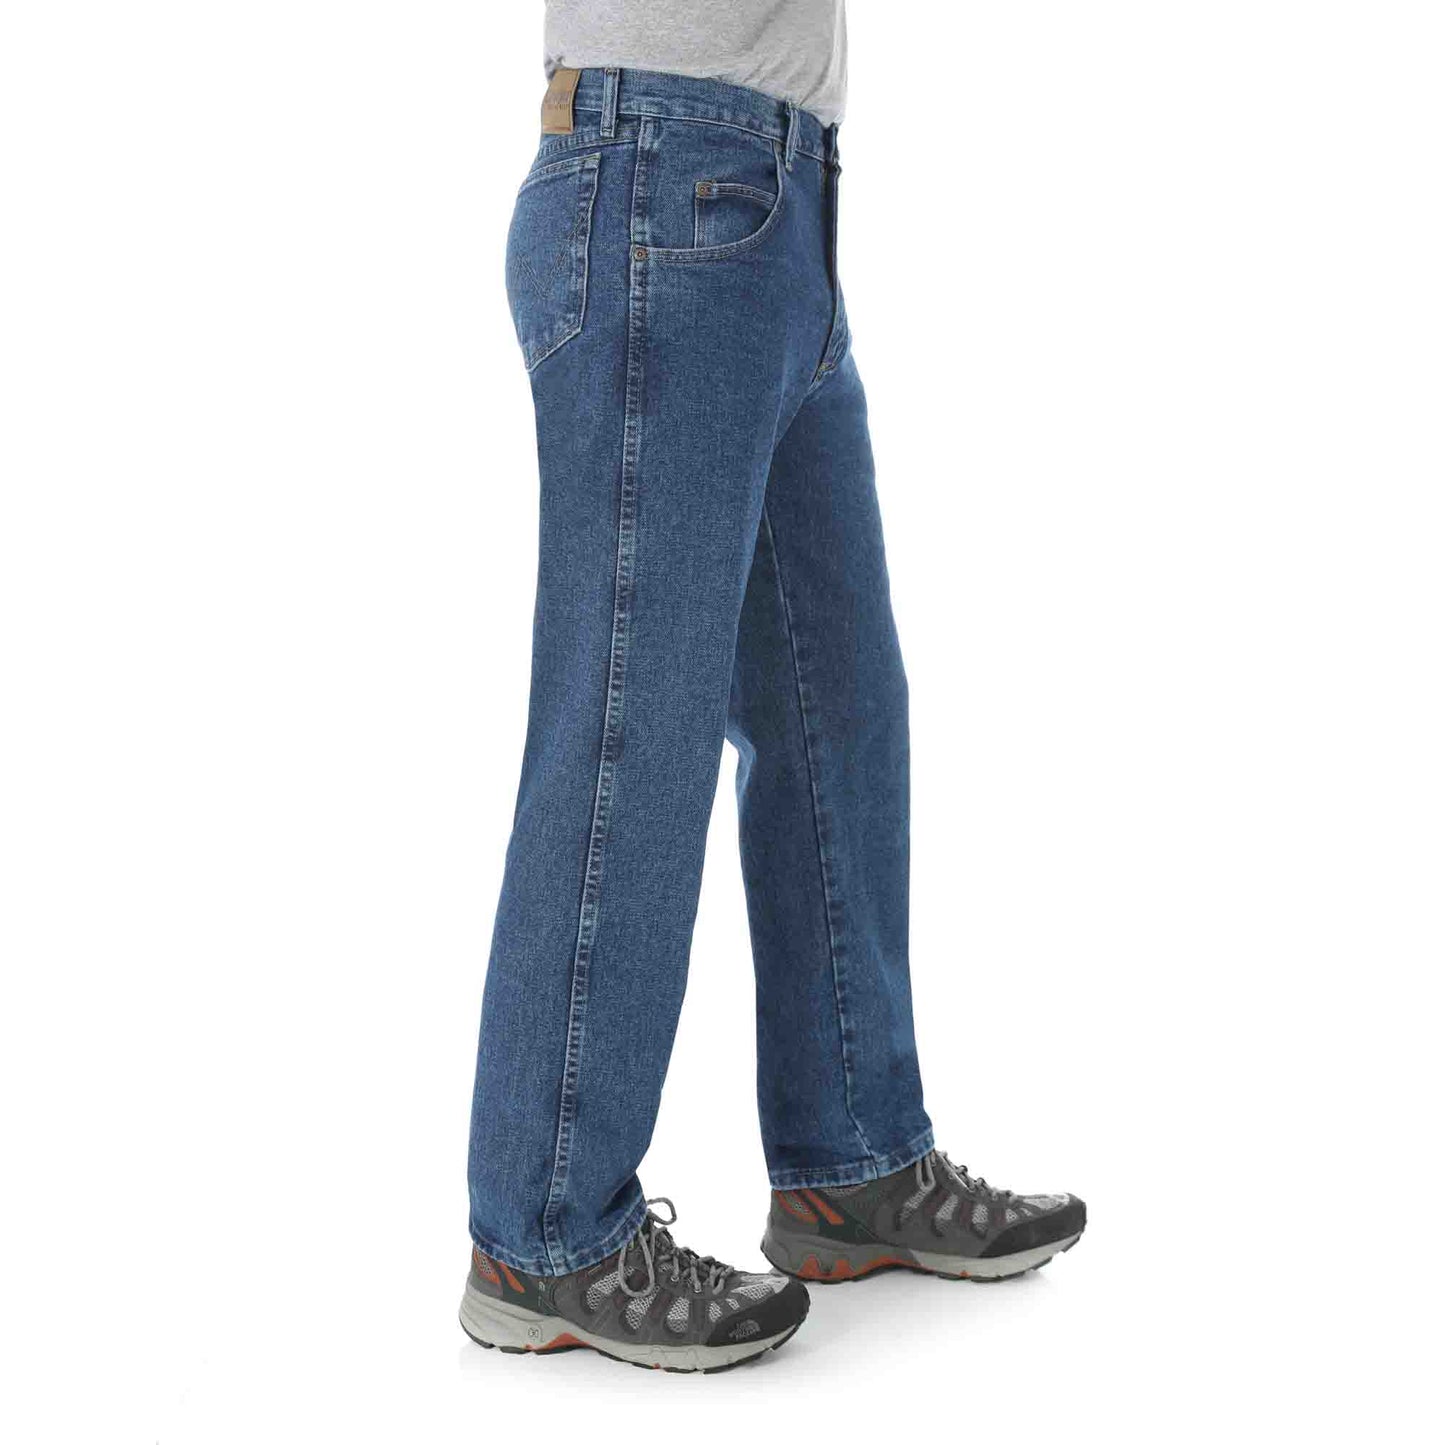 Wrangler Rugged Wear Relazed Fit Jeans in Antique Indigo